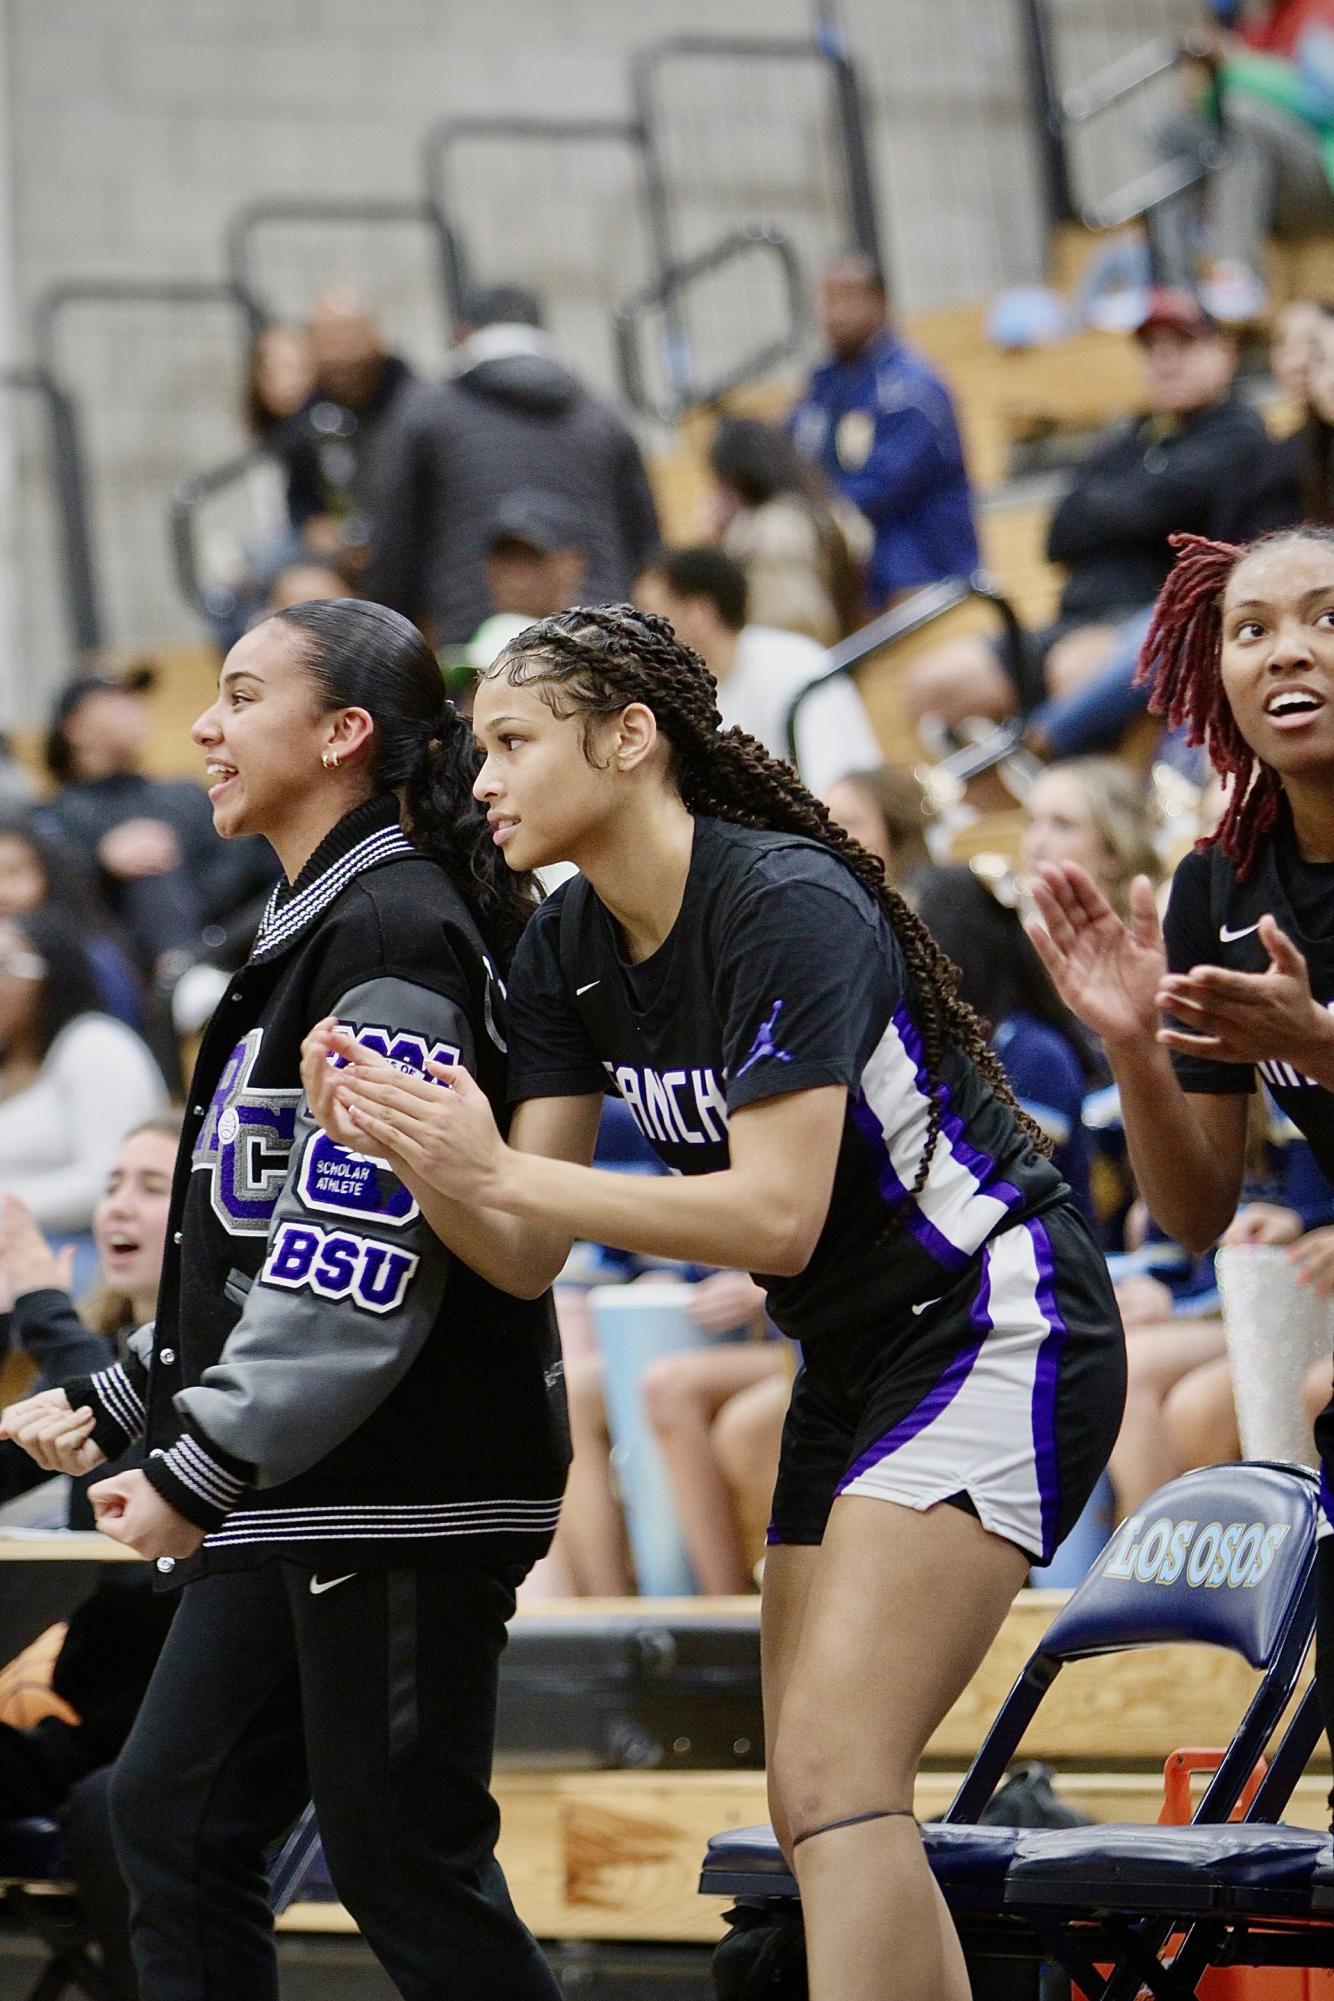 Rancho Cucamonga High School girls basketball team’s historic journey to championship game in a 24-8 season